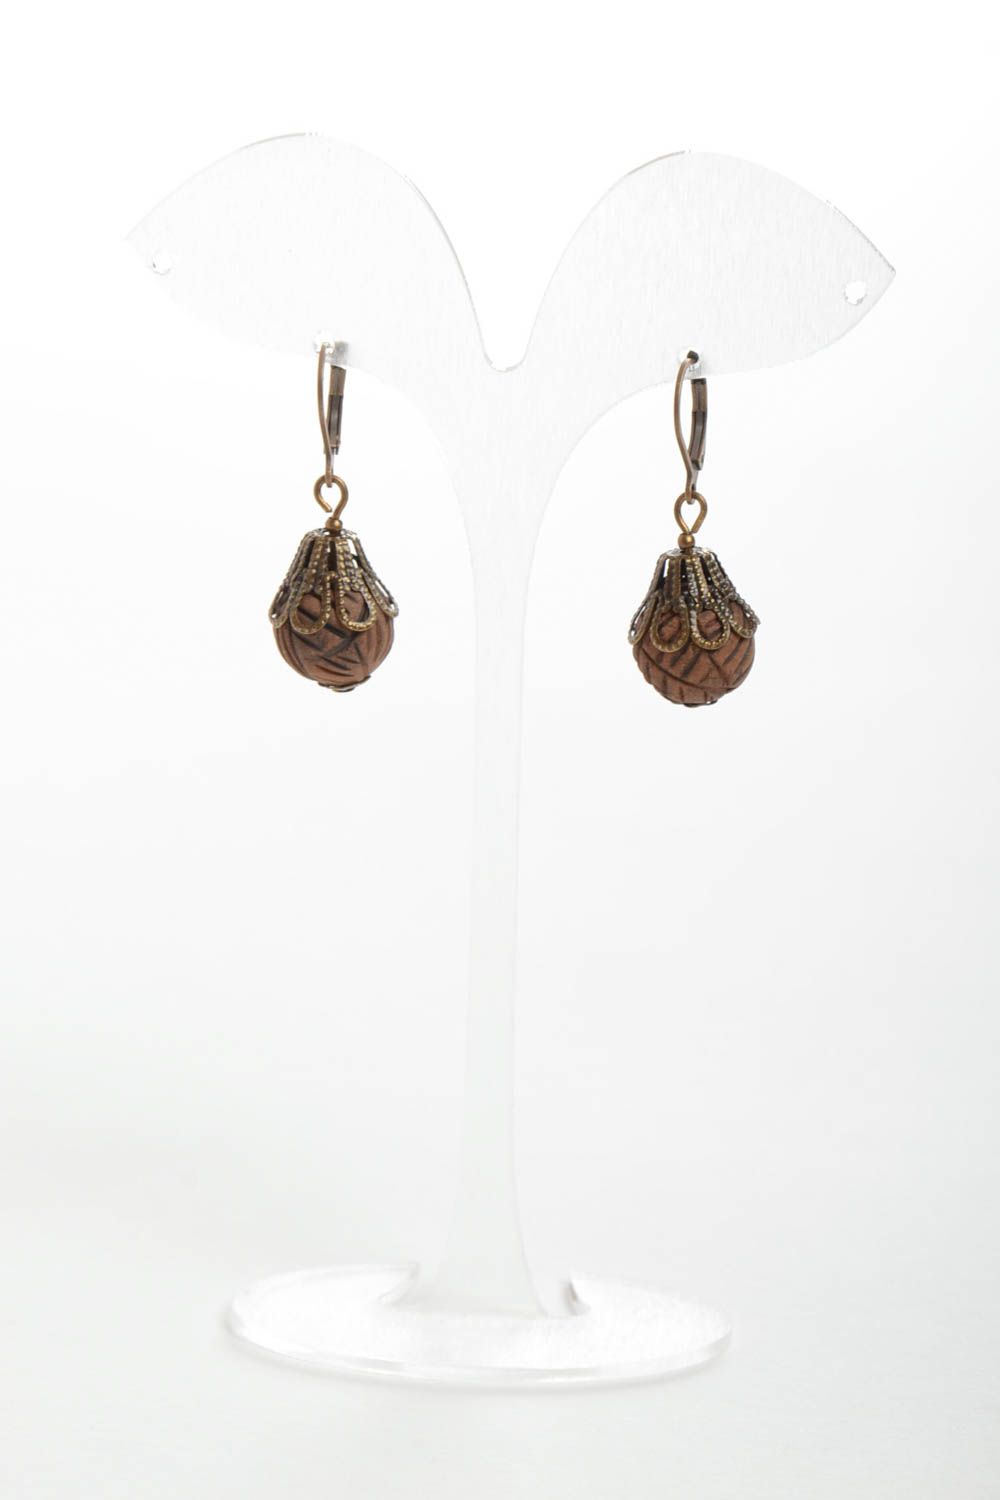 Stylish handmade clay earrings ceramic earrings for women designer accessories photo 2